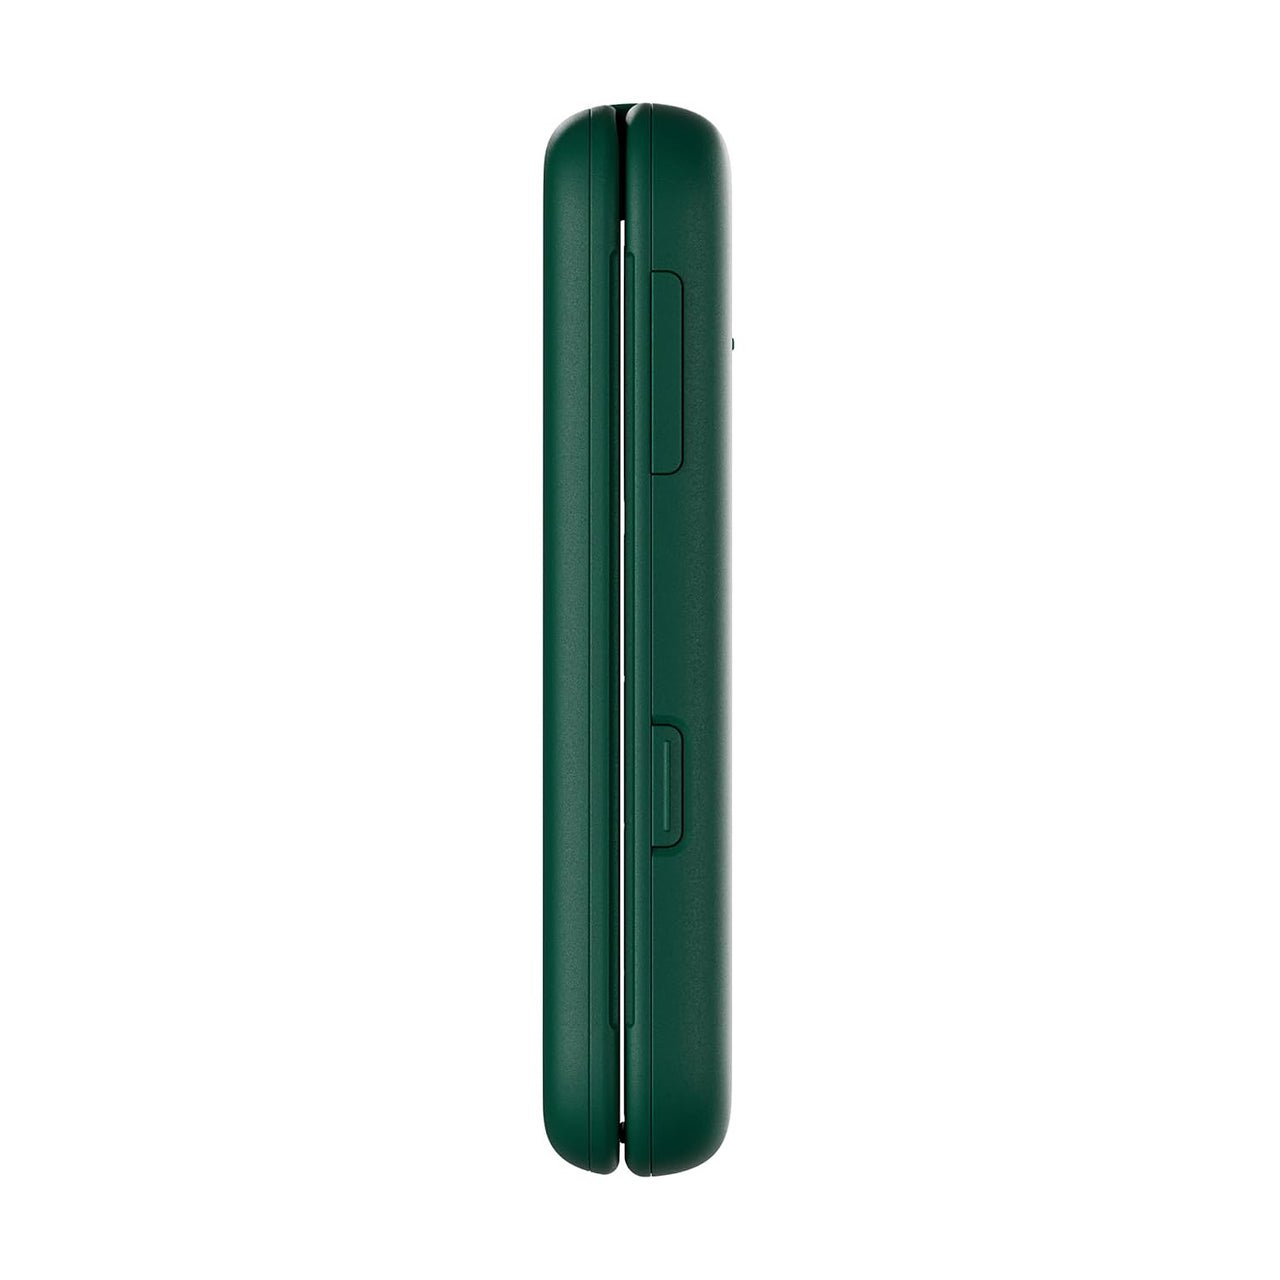 Nokia 2660 Dual SIM 4G FLIP BIG Button Phone Unlocked - Lush Green